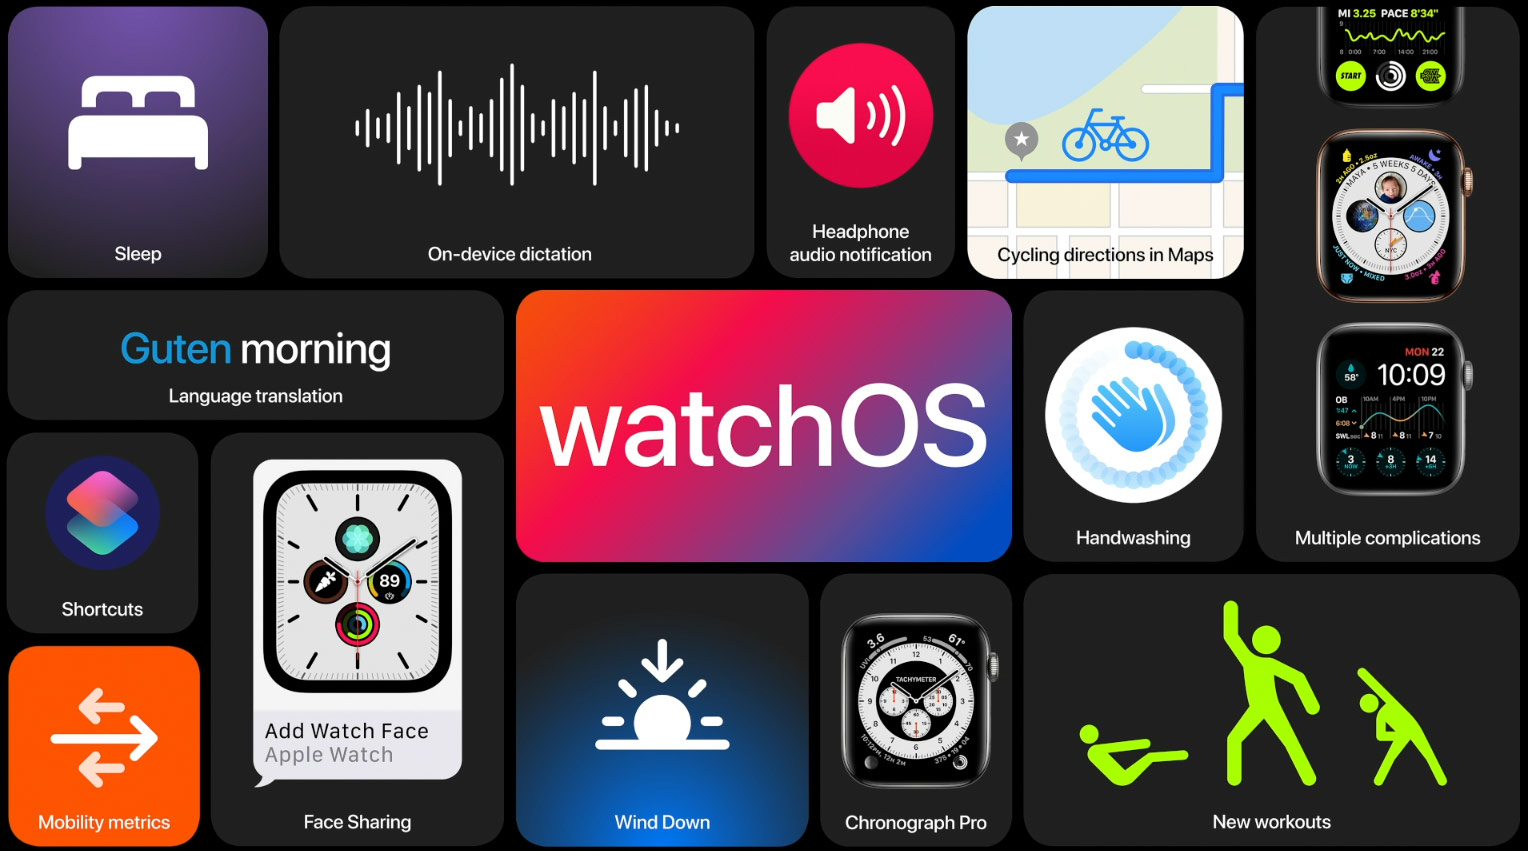 Apple watchOS 7